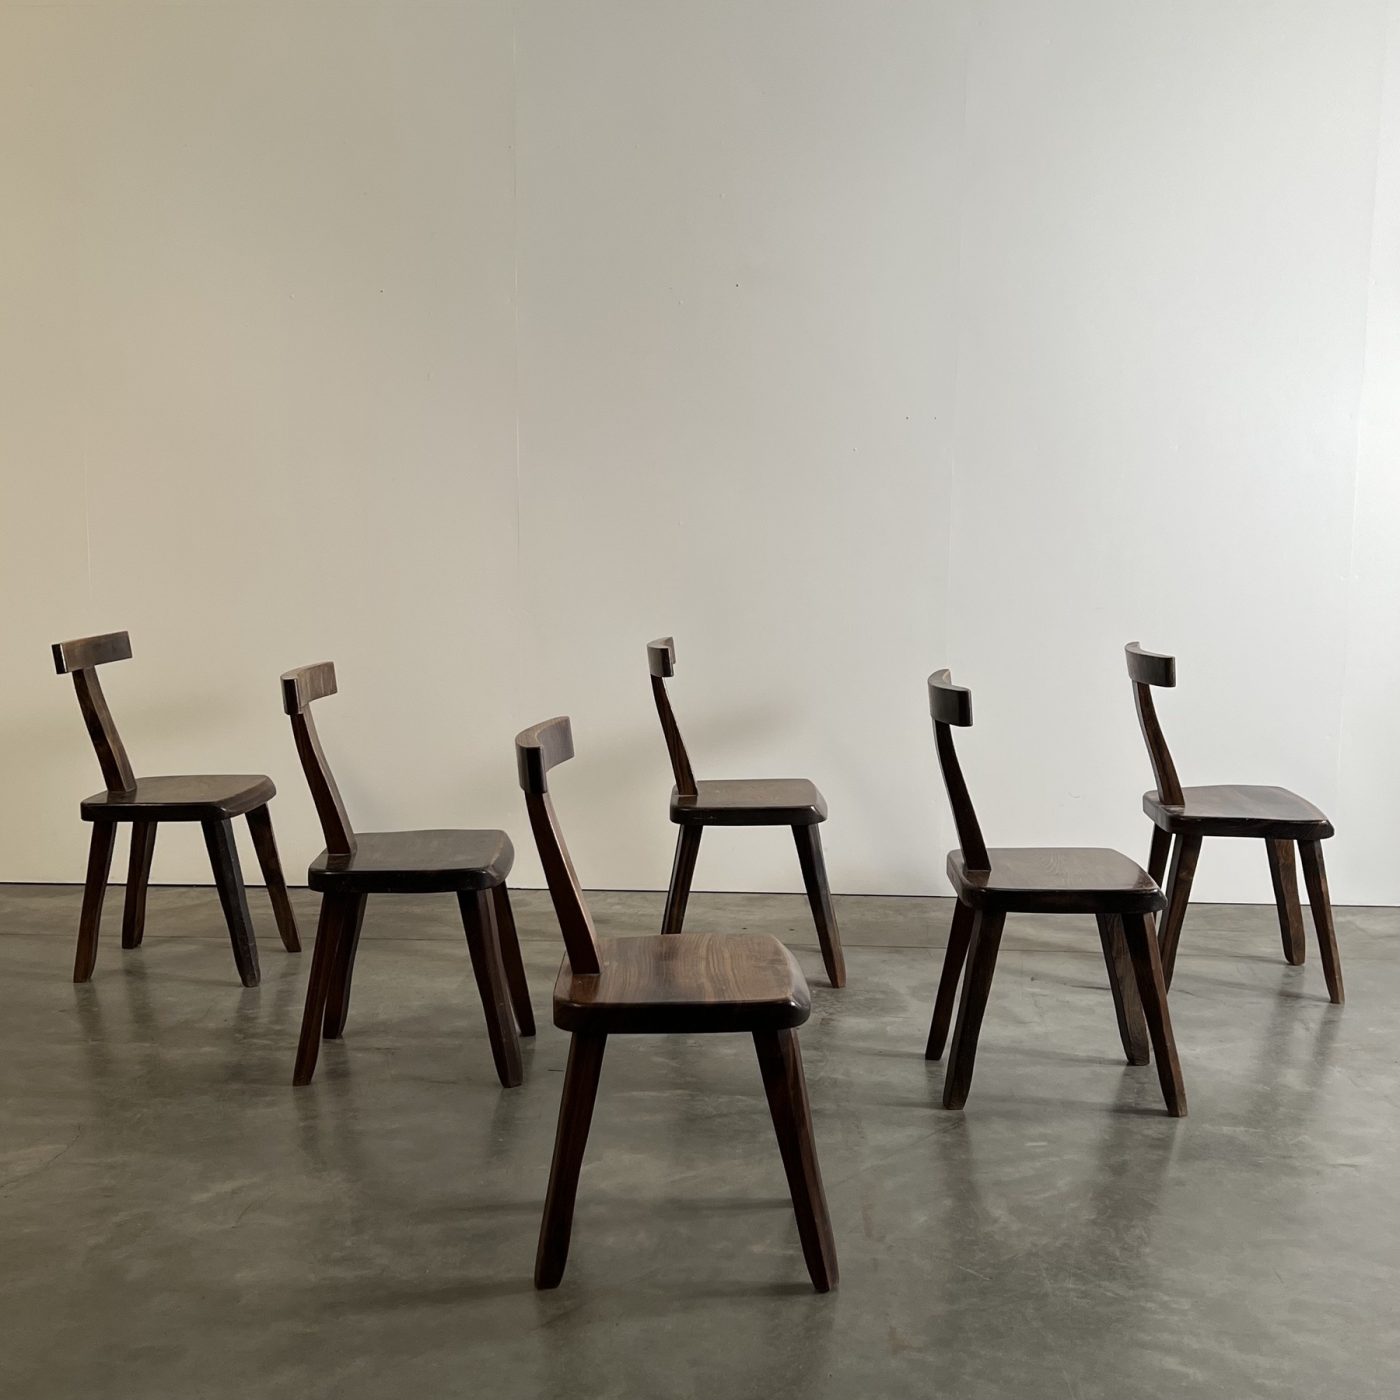 objet-hanninen-chairs0005